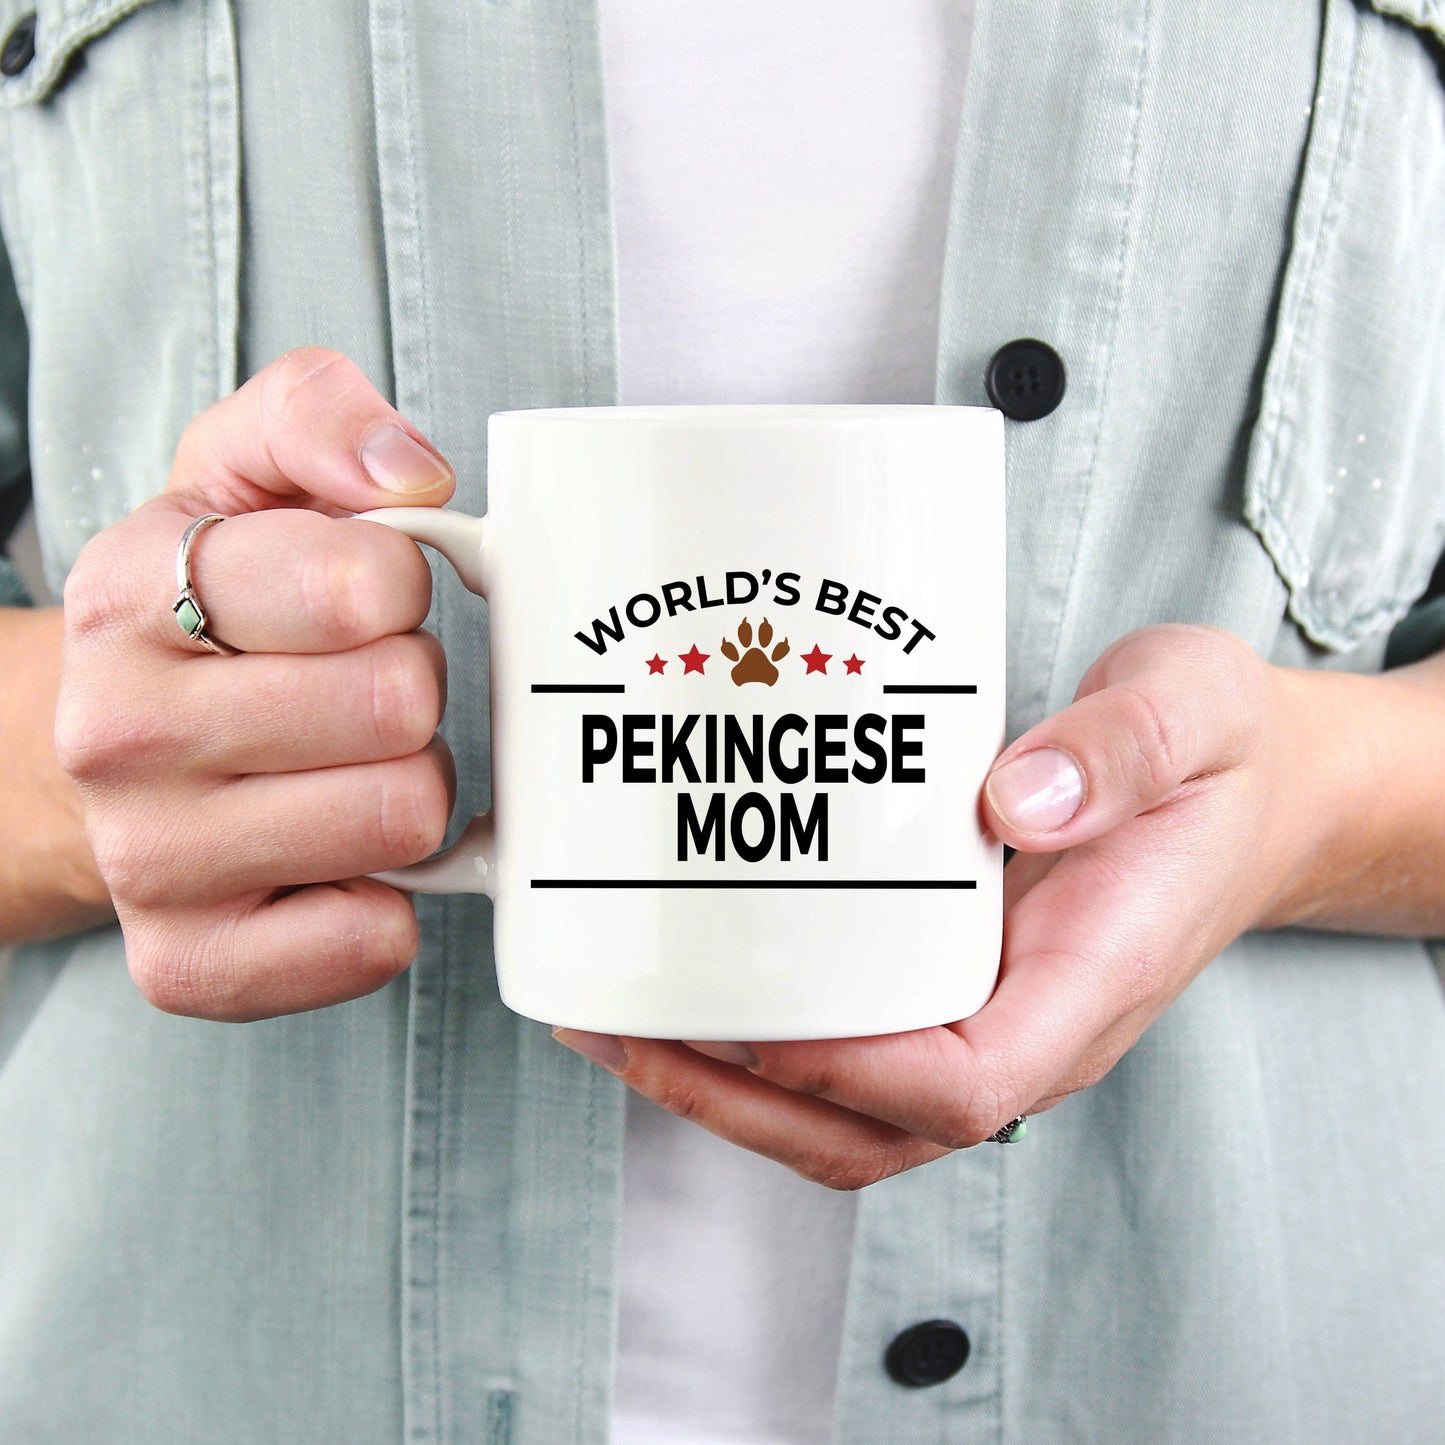 Pekingese Dog Lover Gift World's Best Mom Birthday Mother's Day White Ceramic Coffee Mug